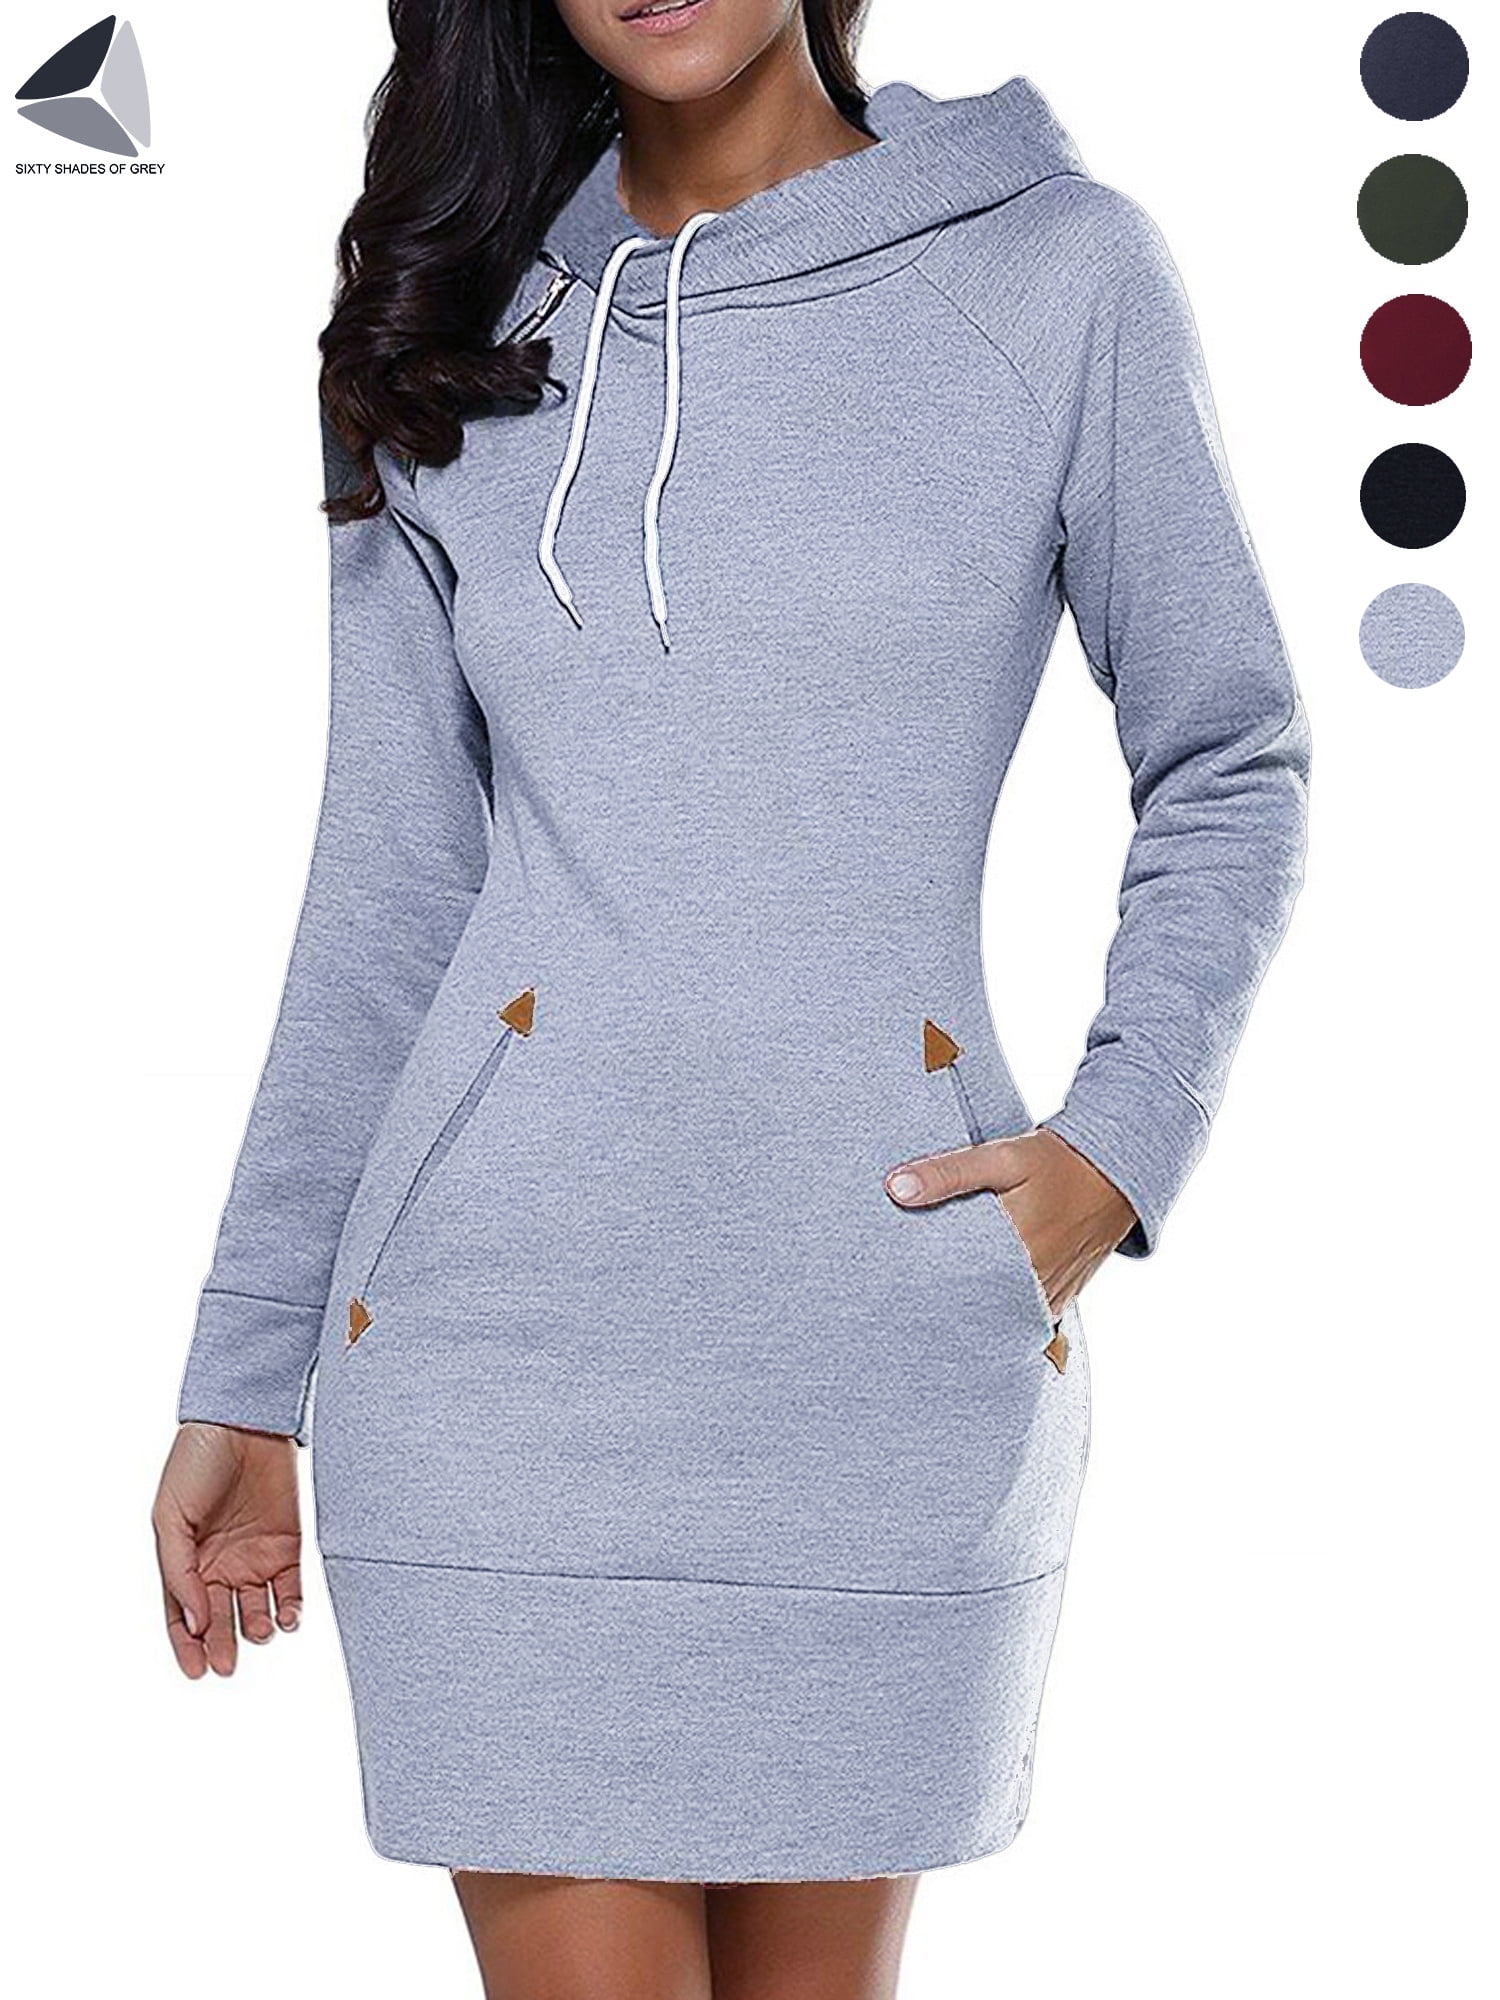 PULLIMORE Womens Winter Hoodie Dresses Slim Long Sleeve Pullover Sweatshirt  Dress with Pocket (L, Light Grey)